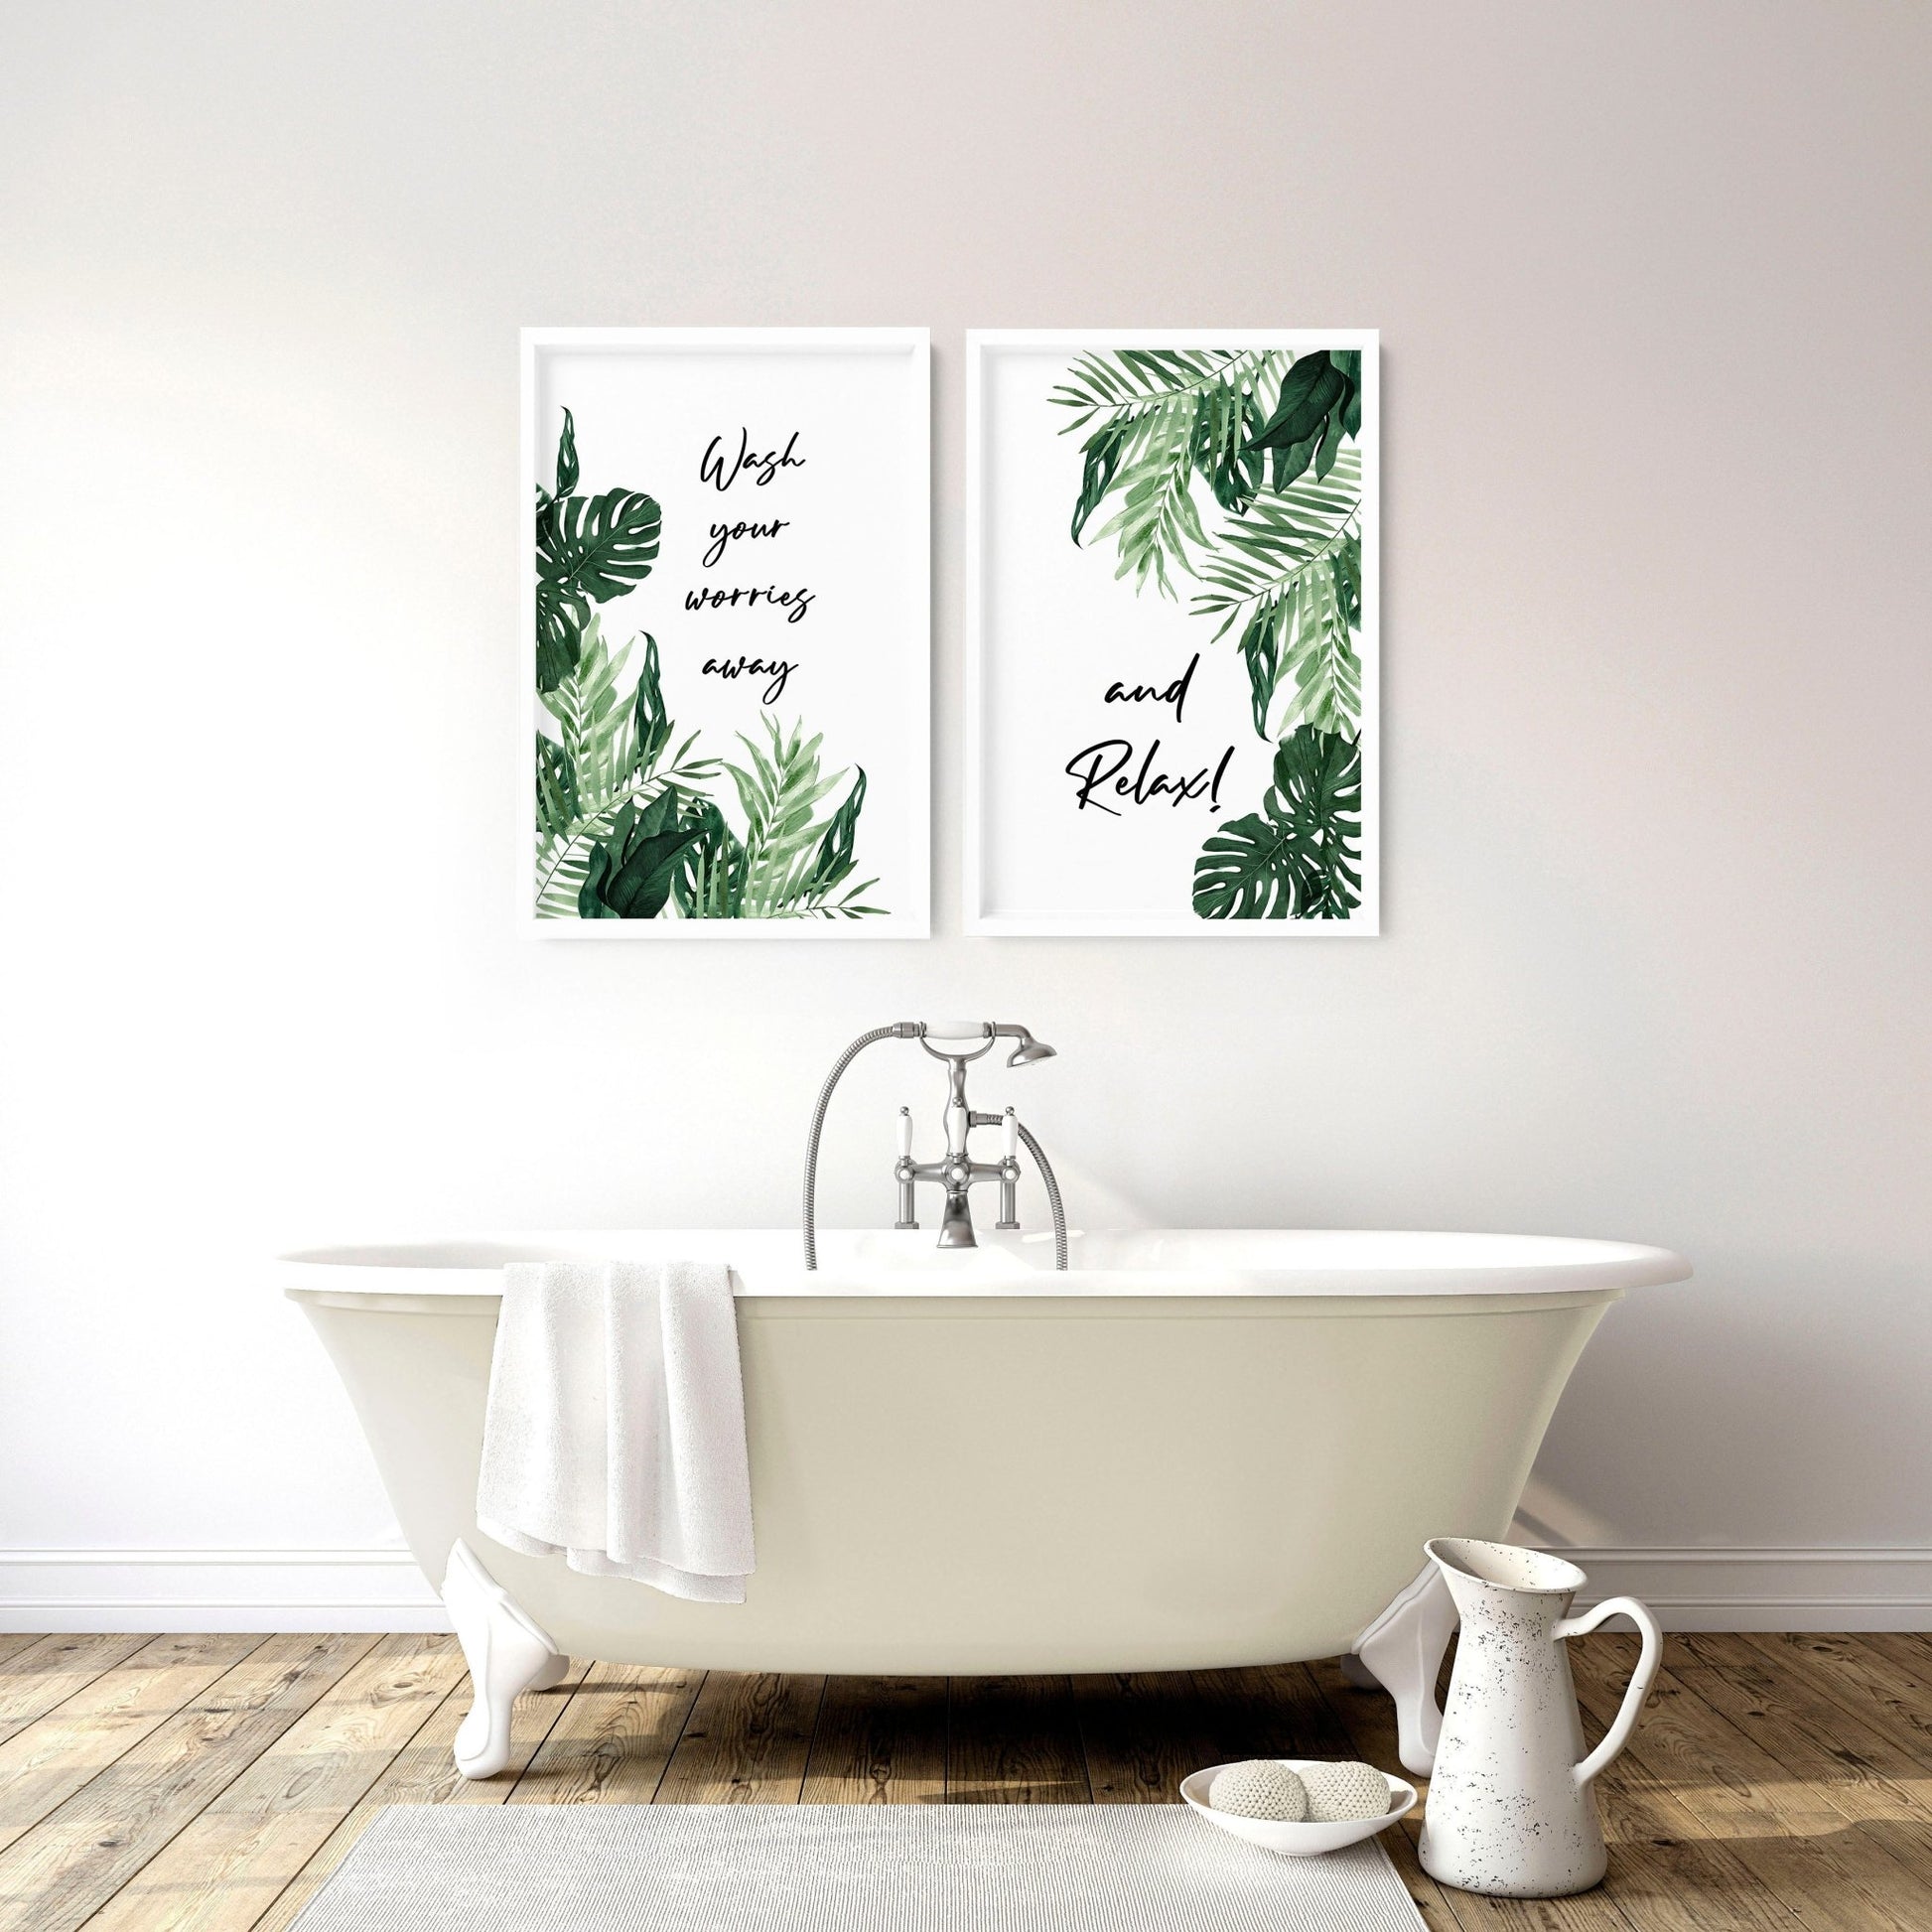 Art in bathroom | Set of 2 wall art prints